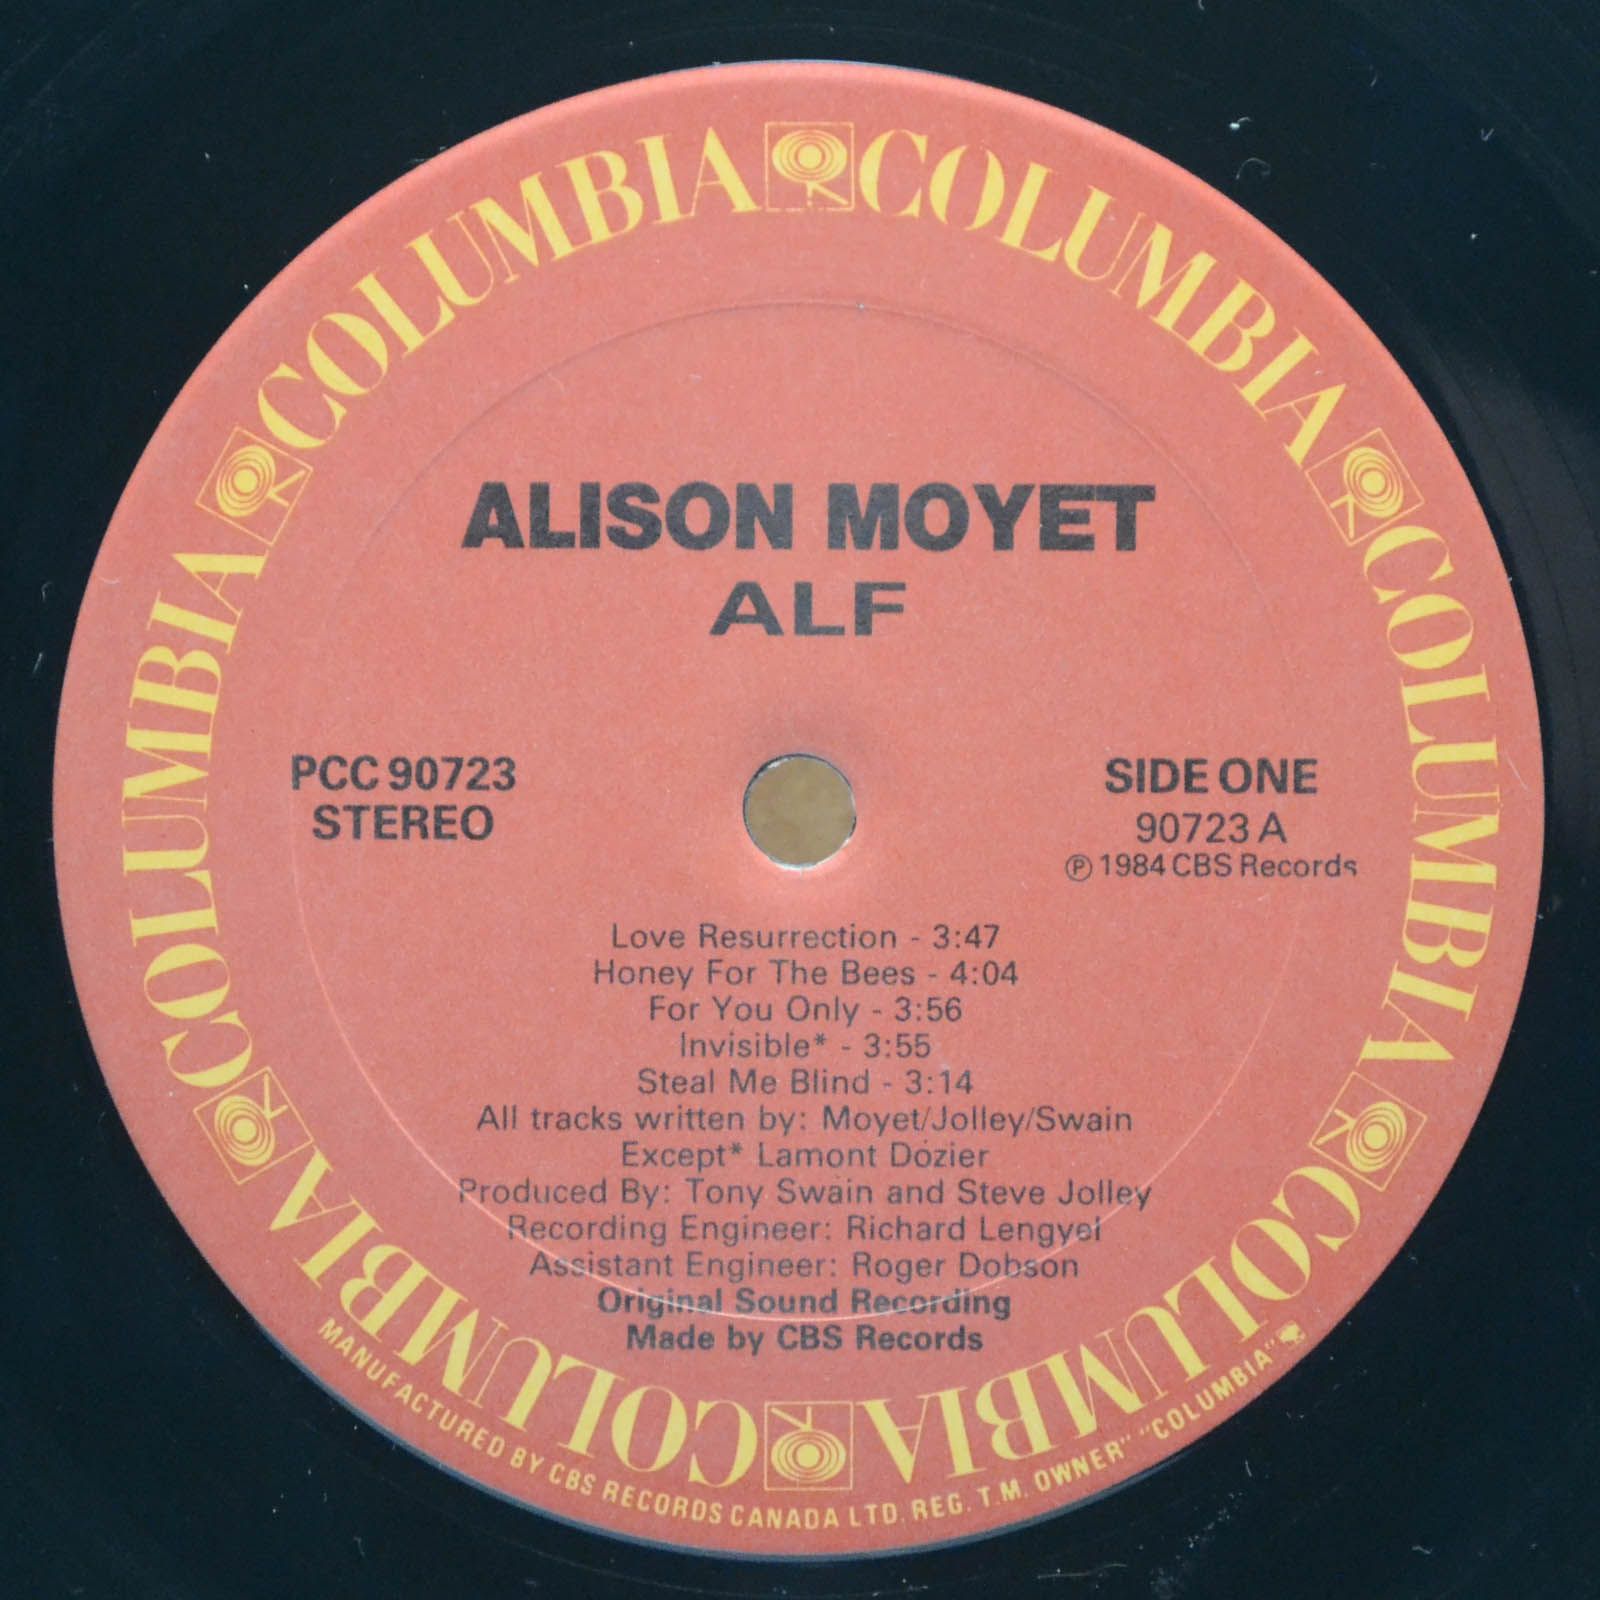 Alison Moyet — Alf, 1985